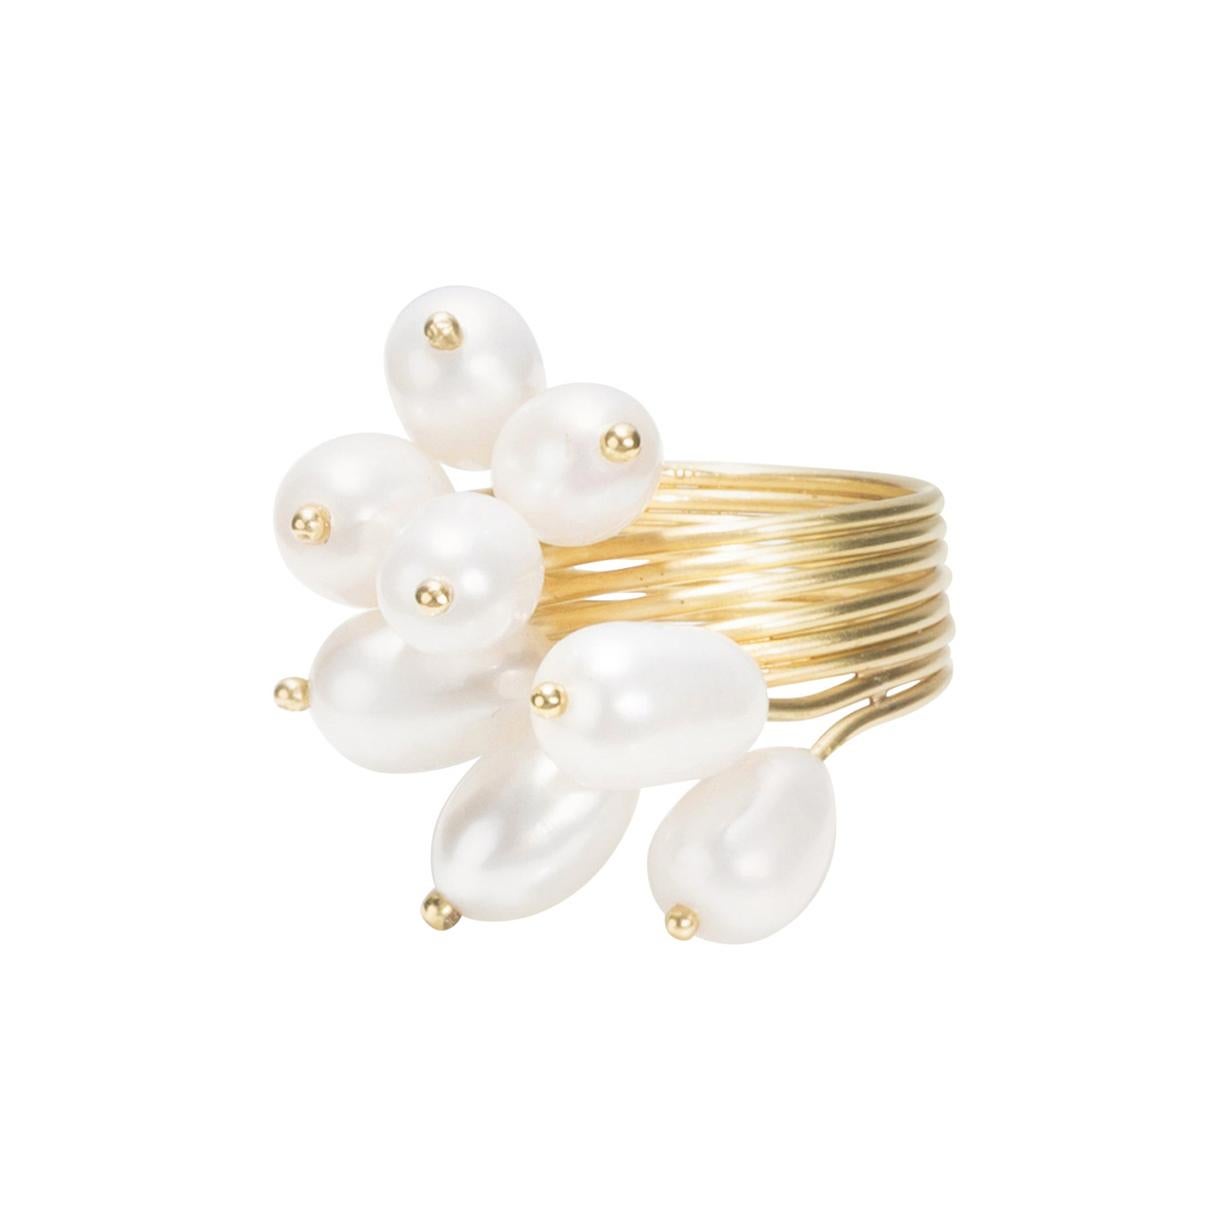 Ambroise Degenève's Unique 18k Gold, Freshwater Pearls, Silver 750 Roseaux Ring For Sale